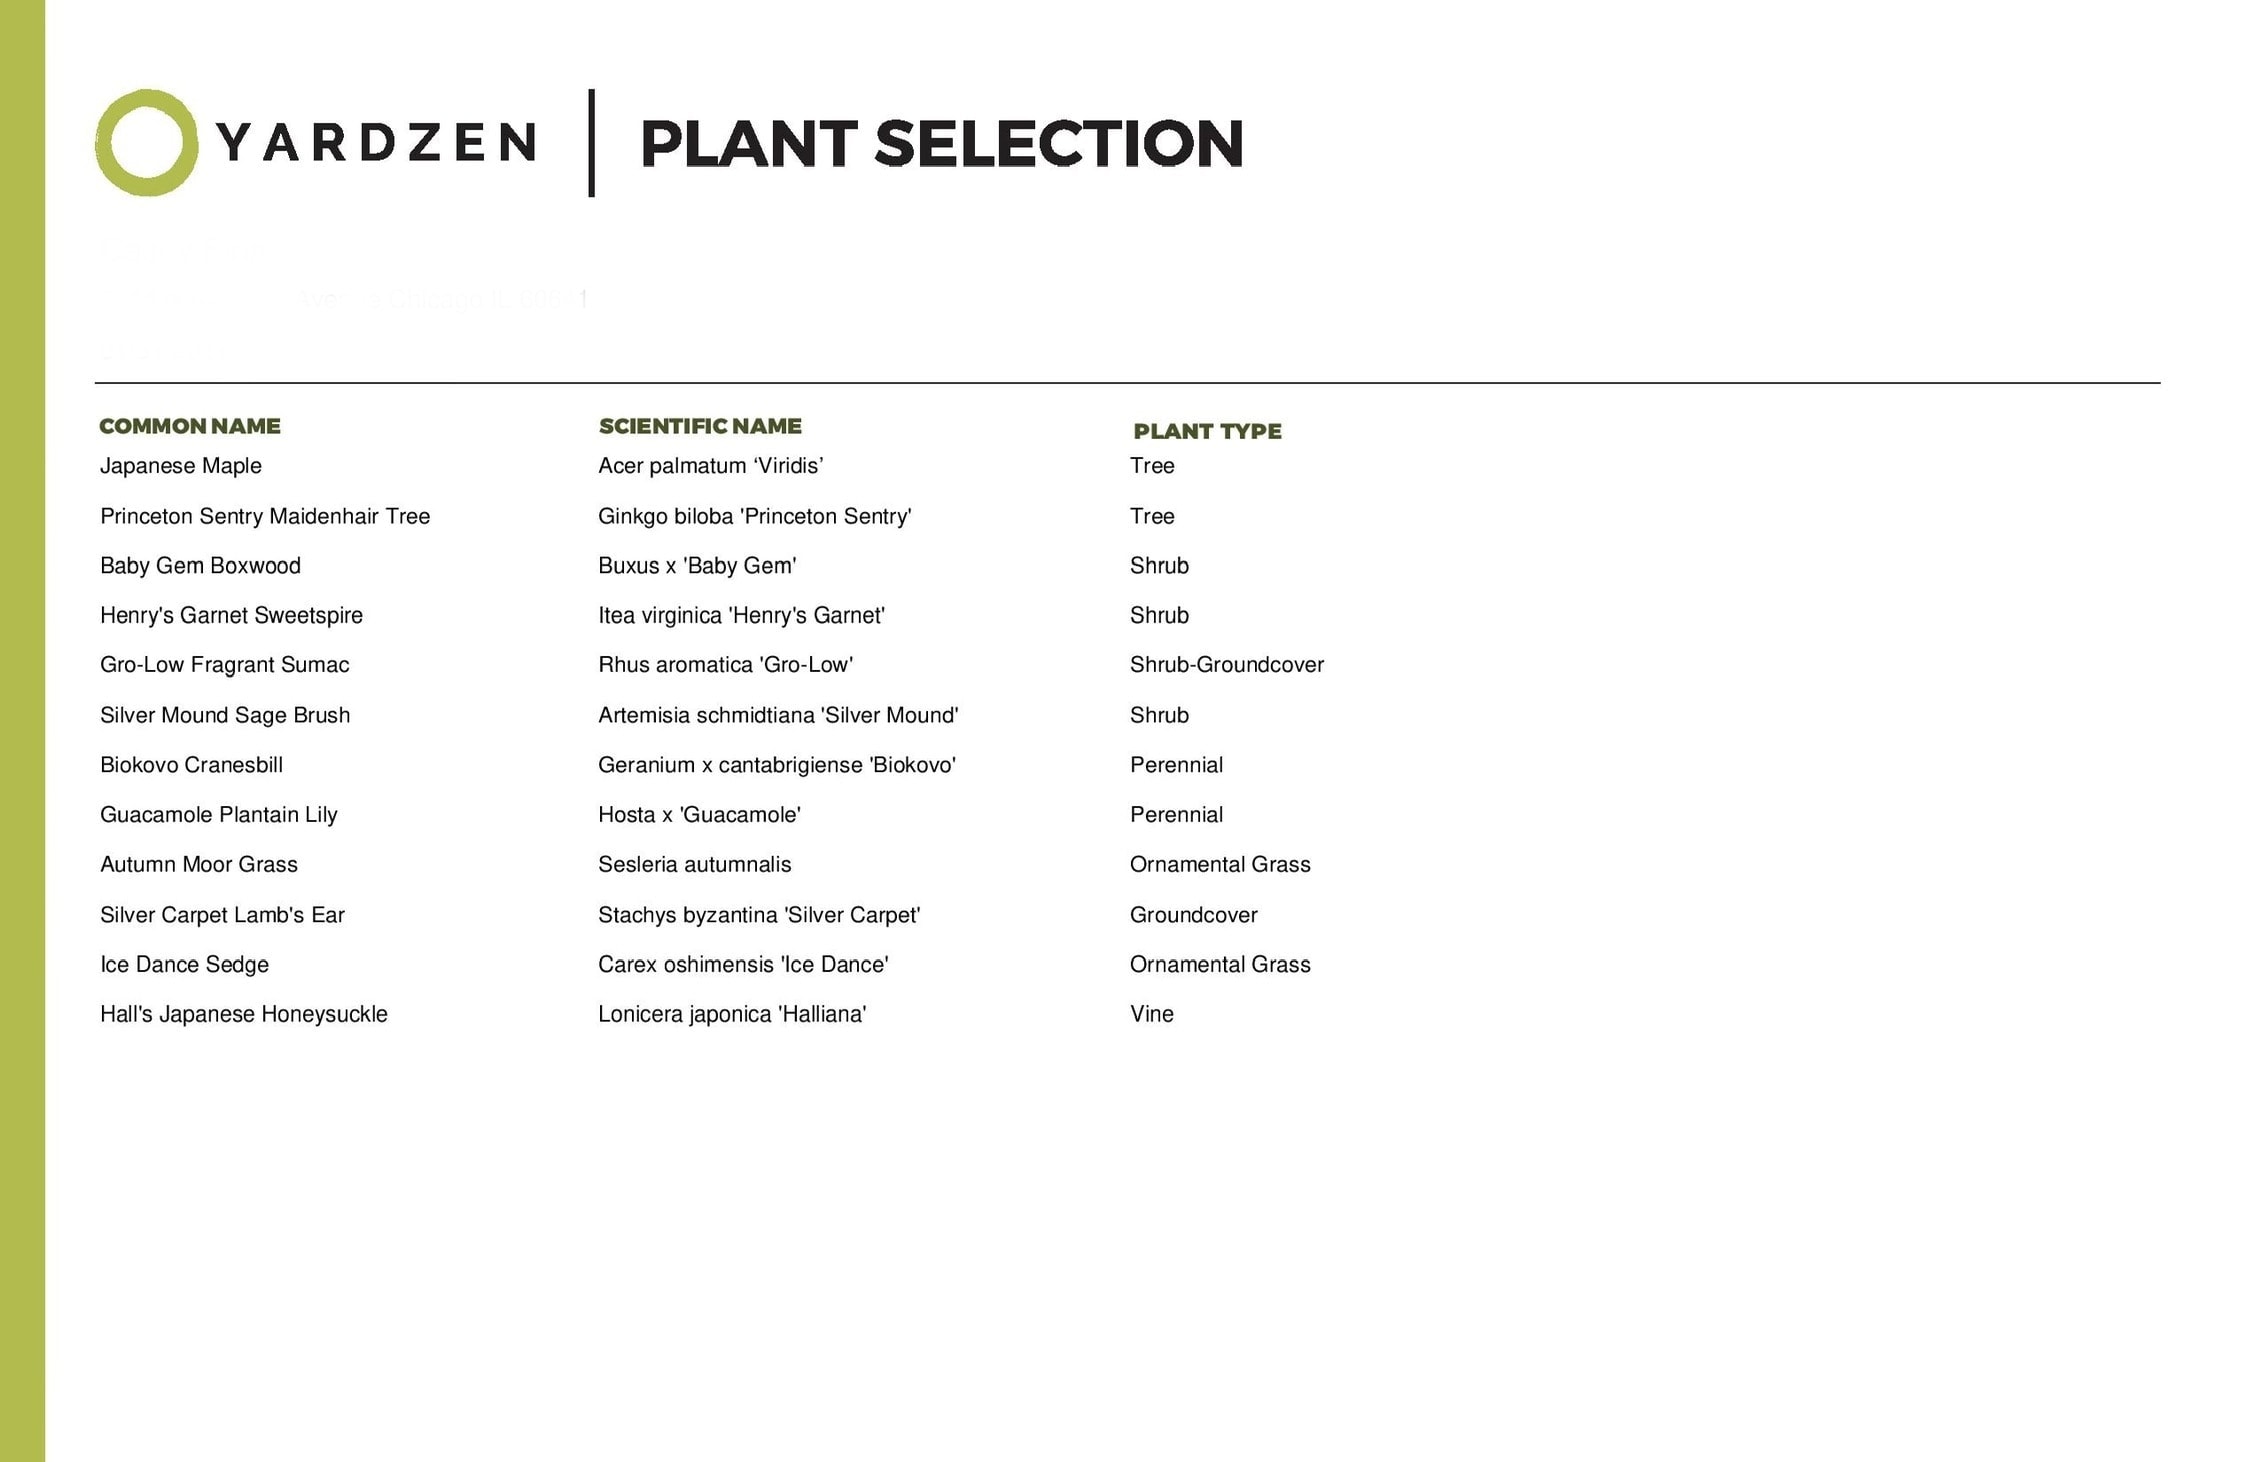 Yardzen plant selection